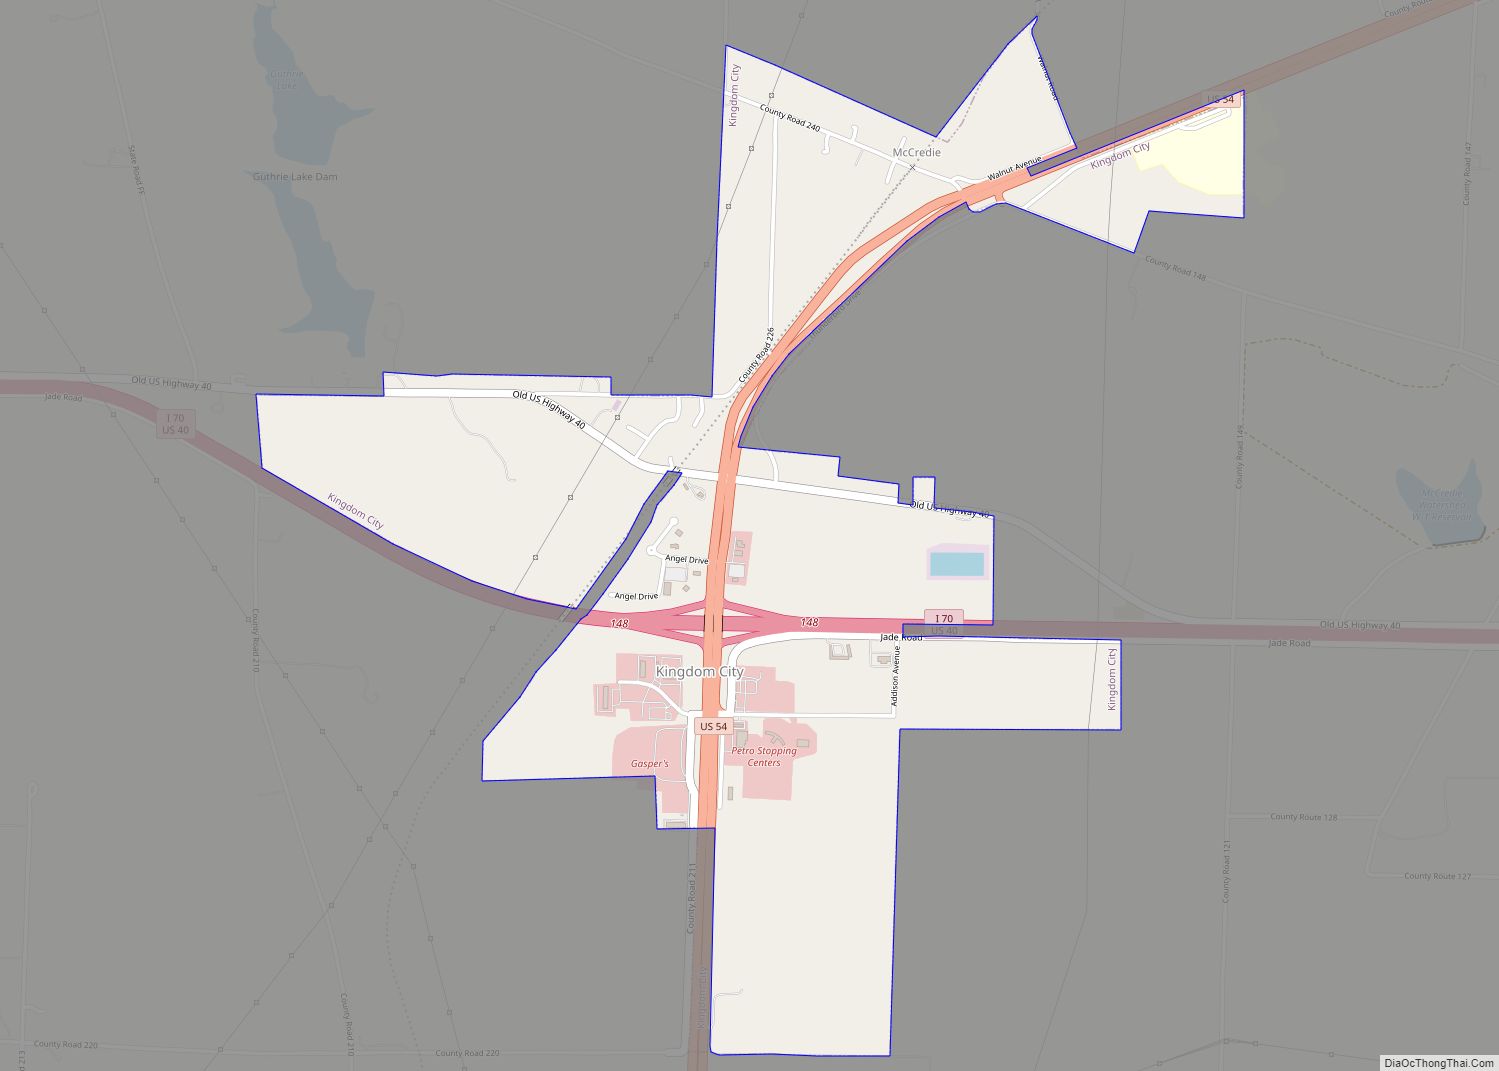 Map of Kingdom City village